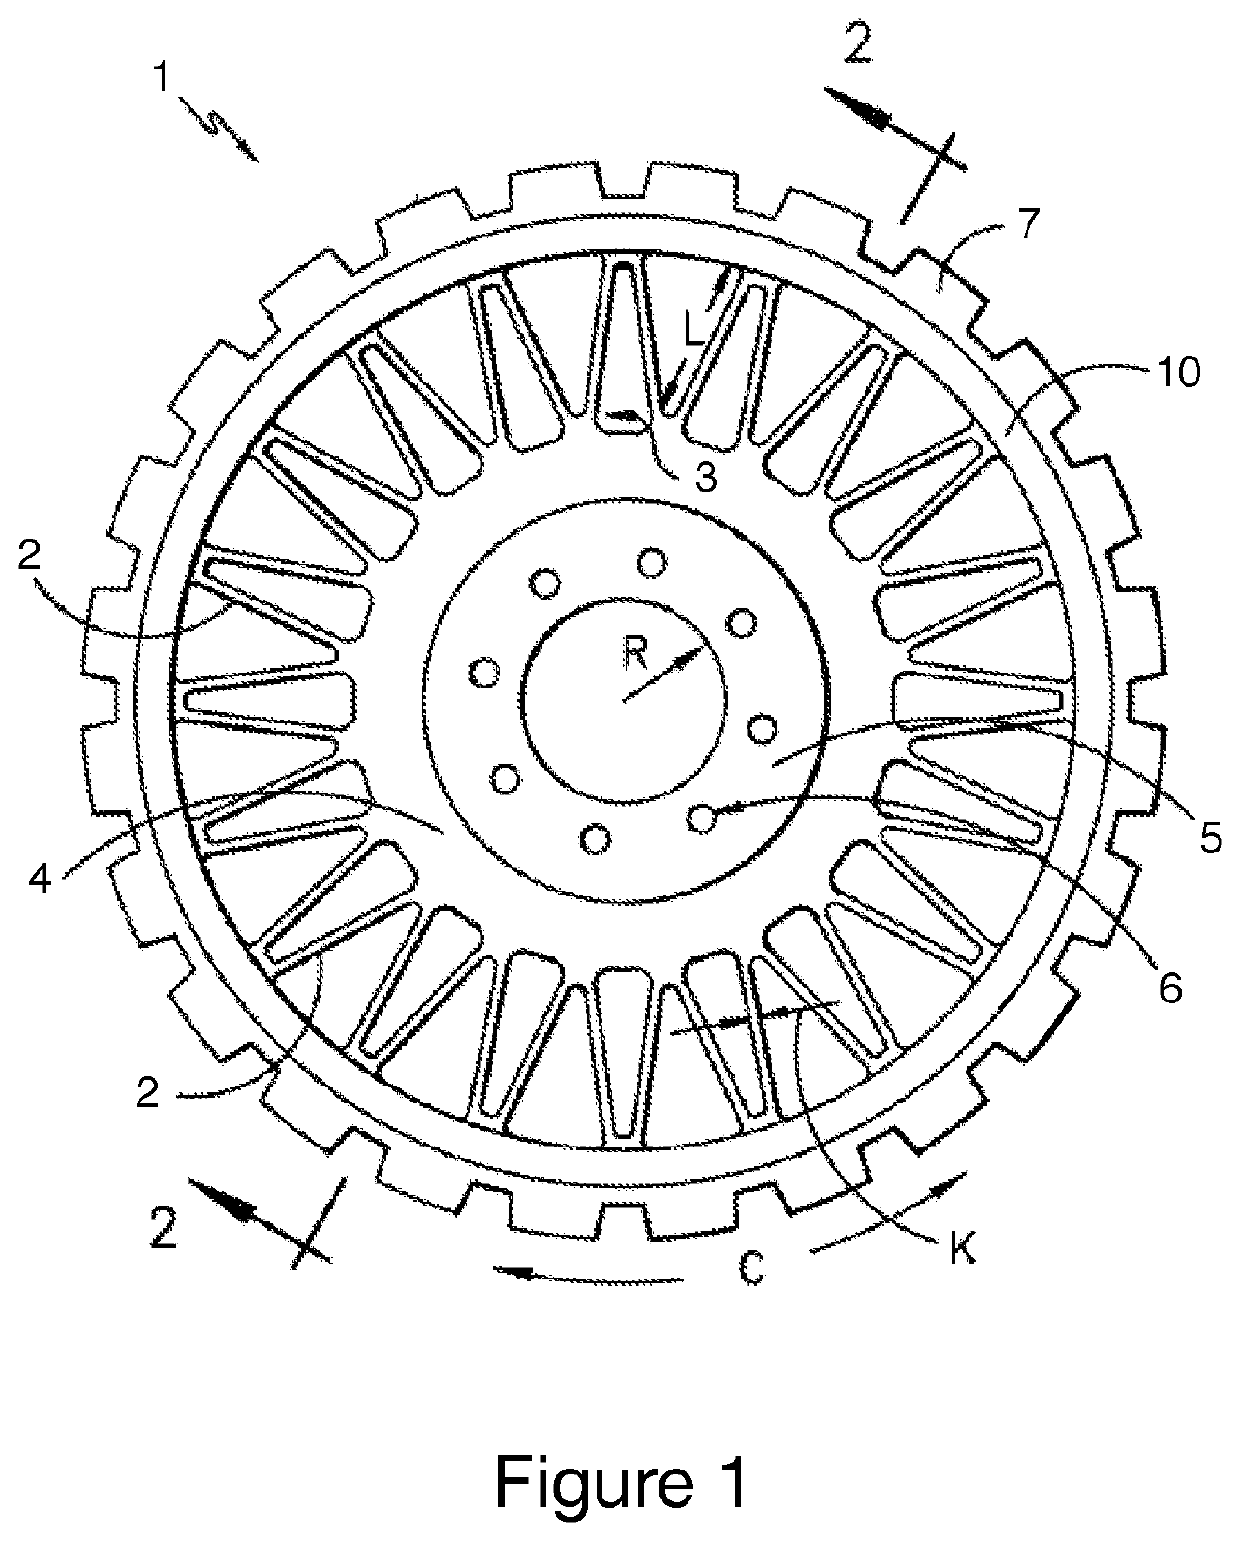 Non-pneumatic wheel comprising a circumferential reinforcement structure